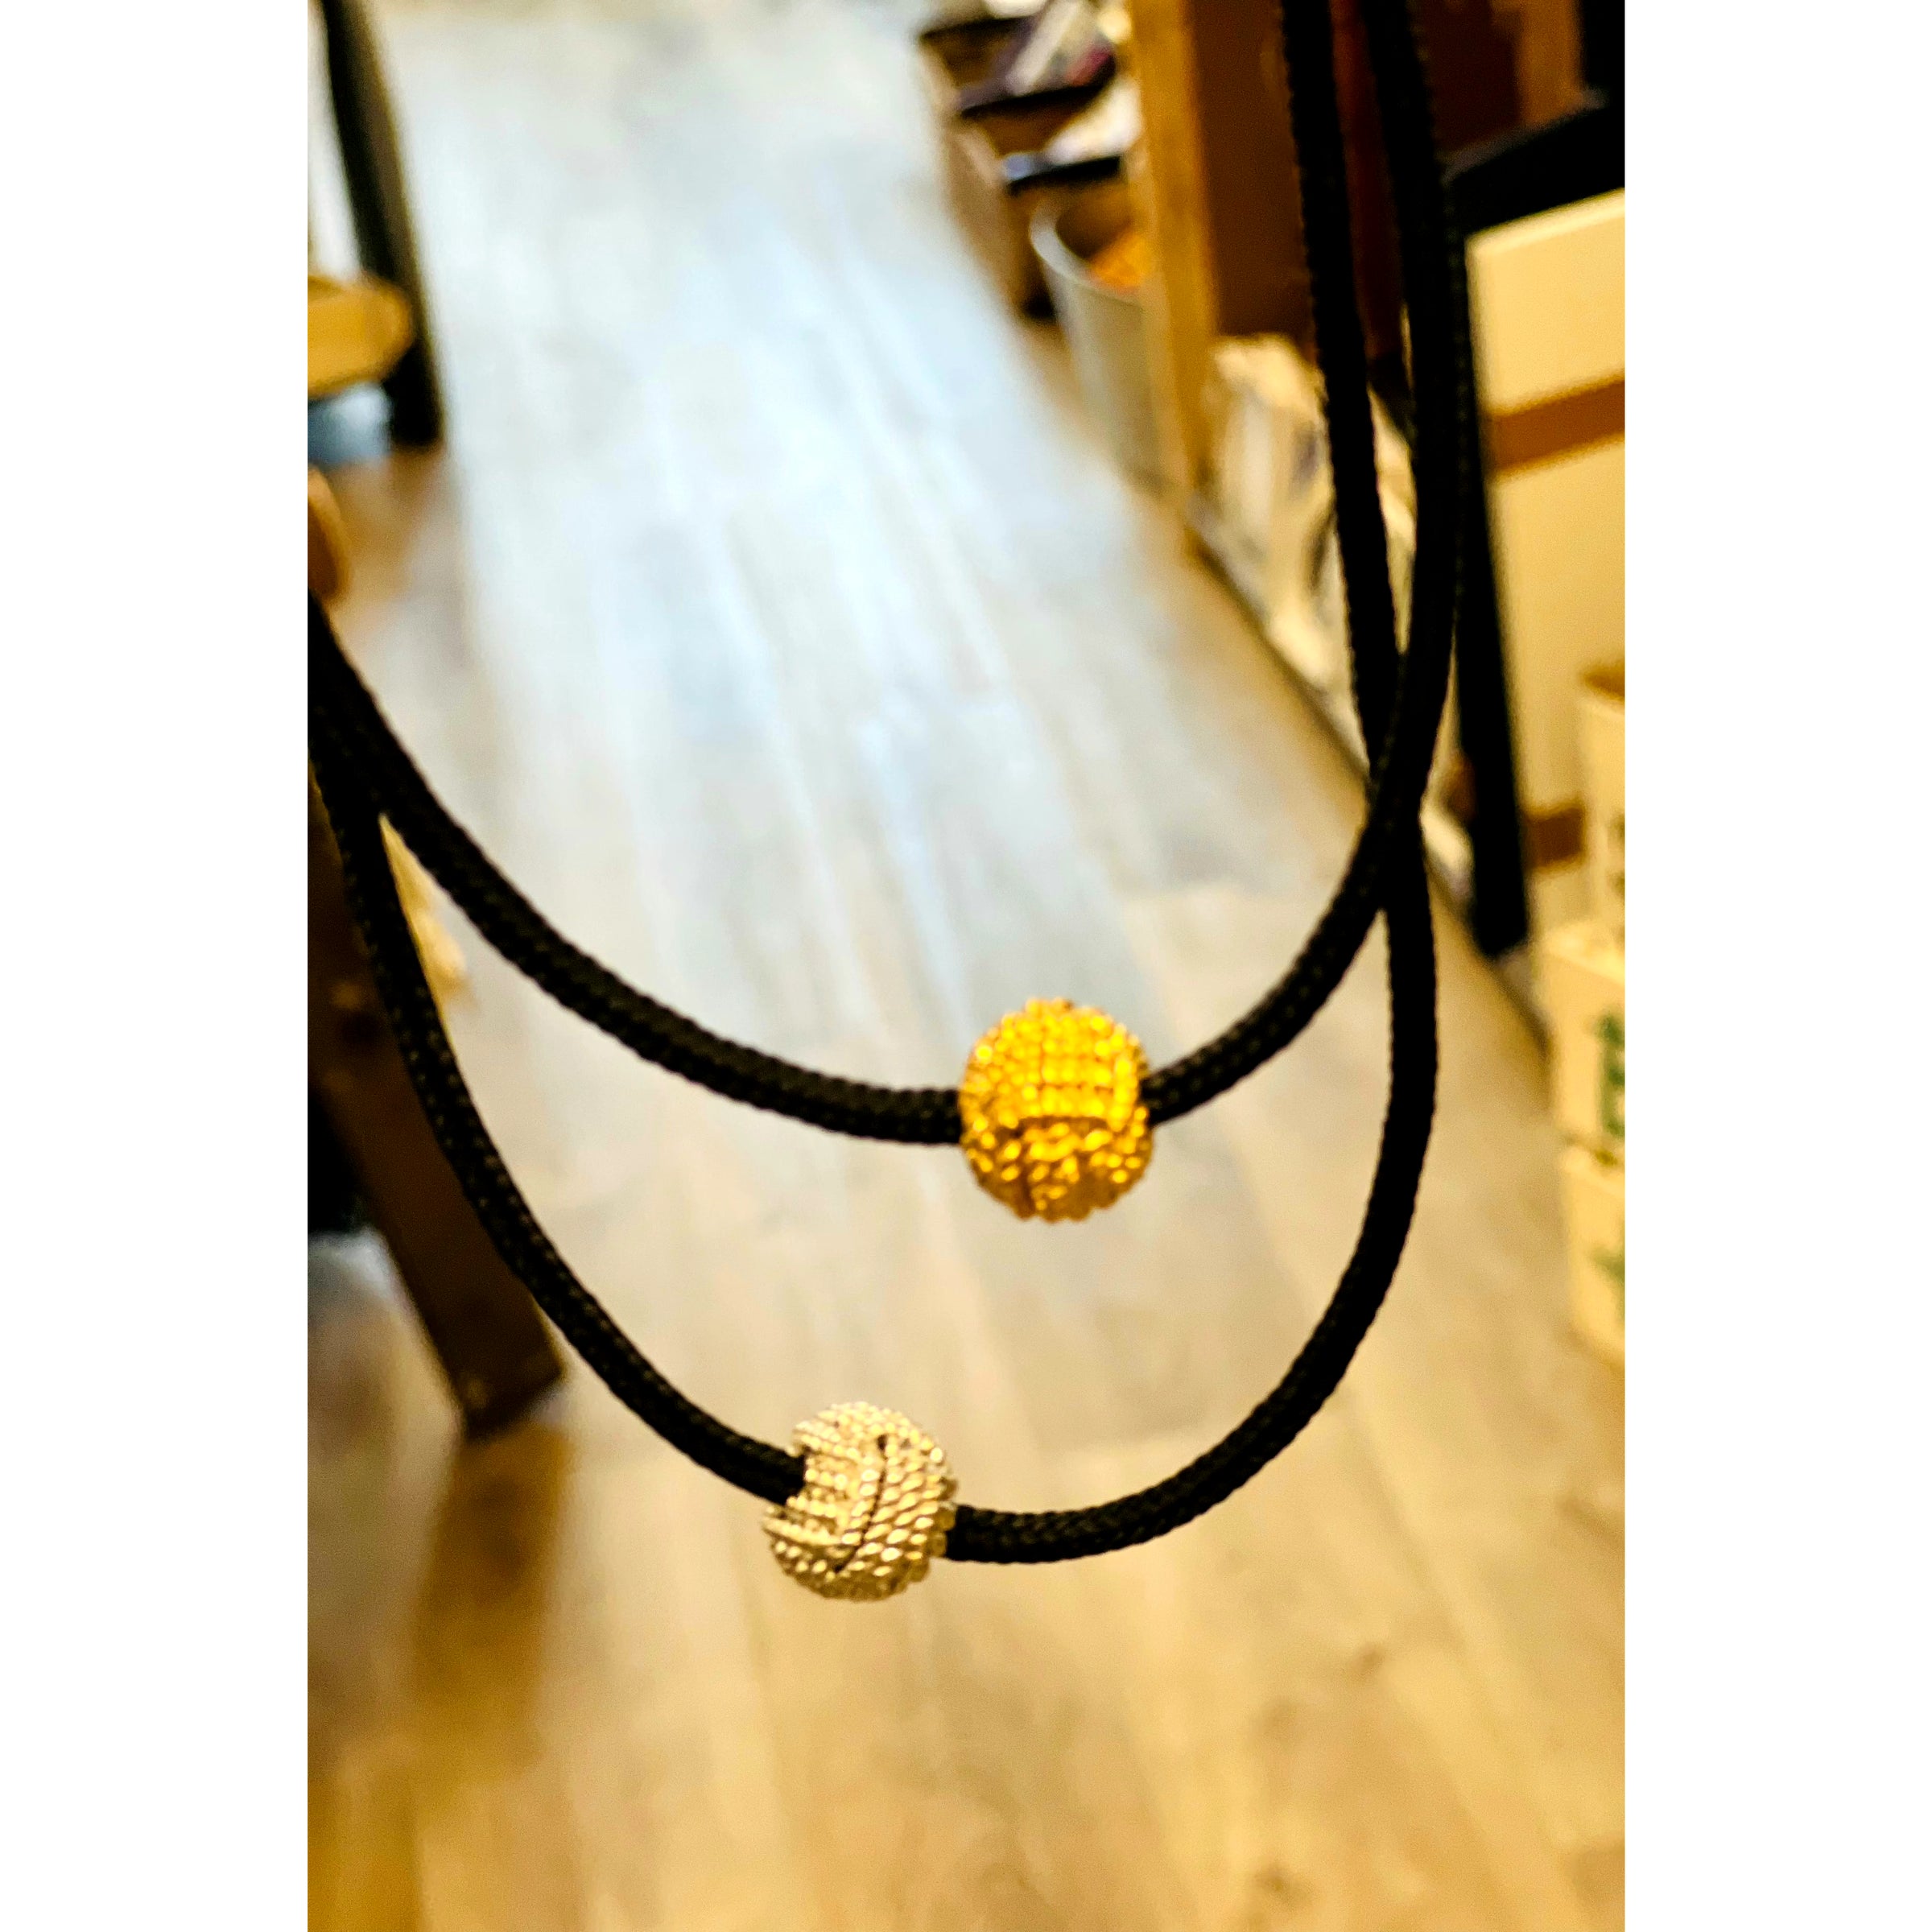 Captain’s Cord Necklace and Bracelet